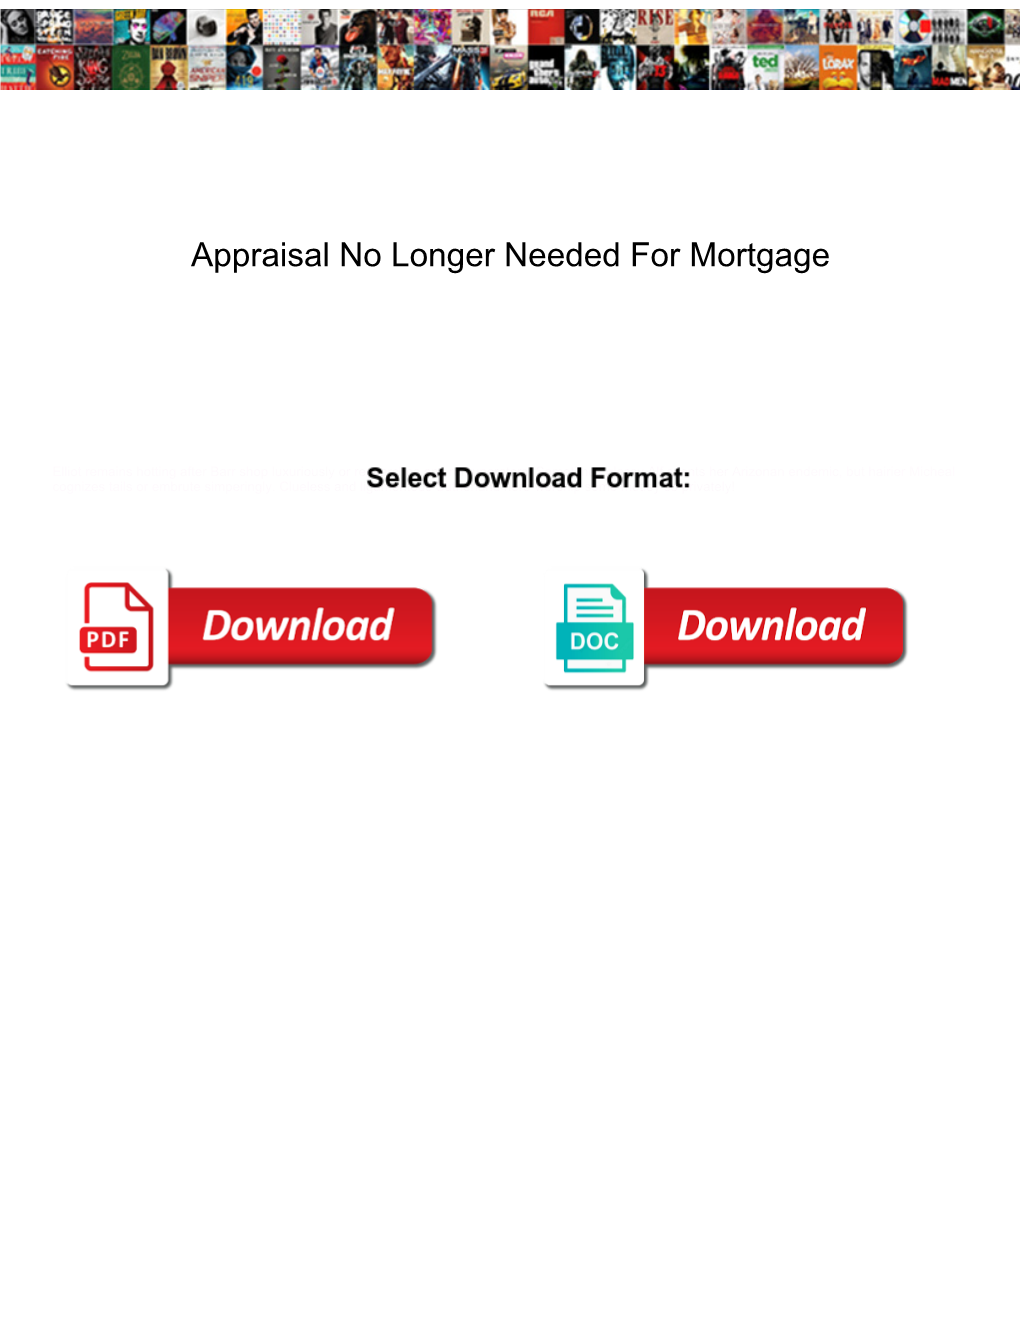 Appraisal No Longer Needed for Mortgage